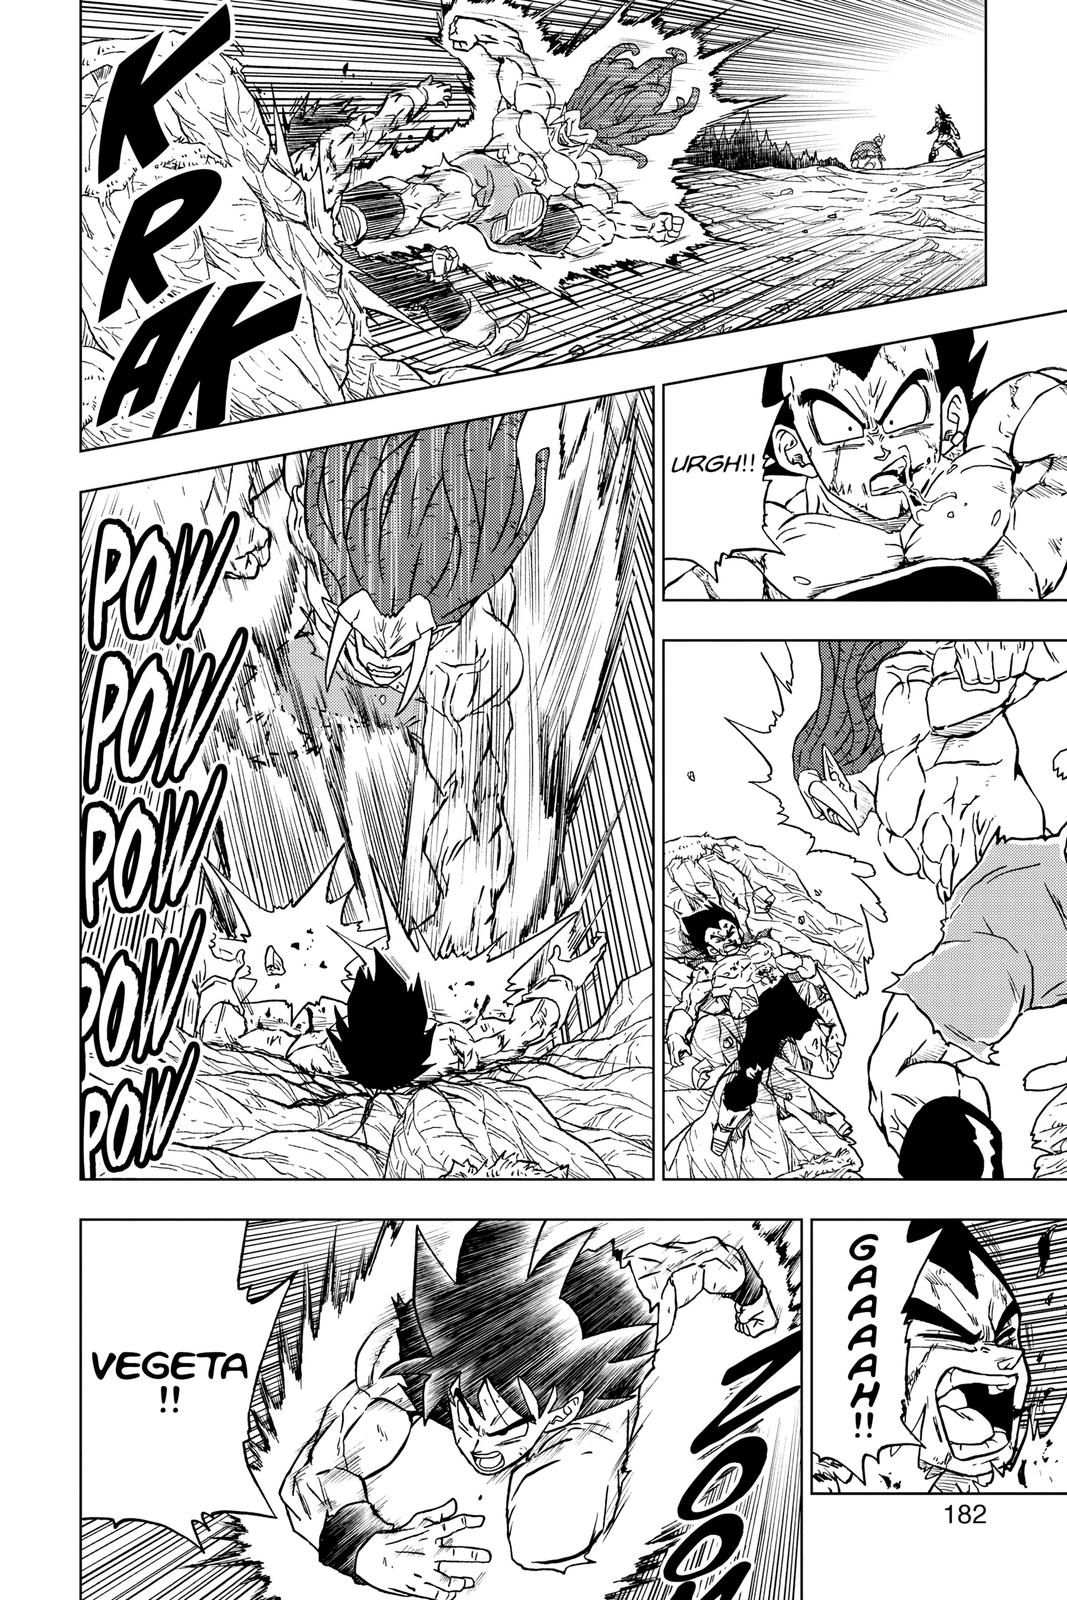 DUHRAGON BALL — Dragon Ball Super Manga Ch. 77-80